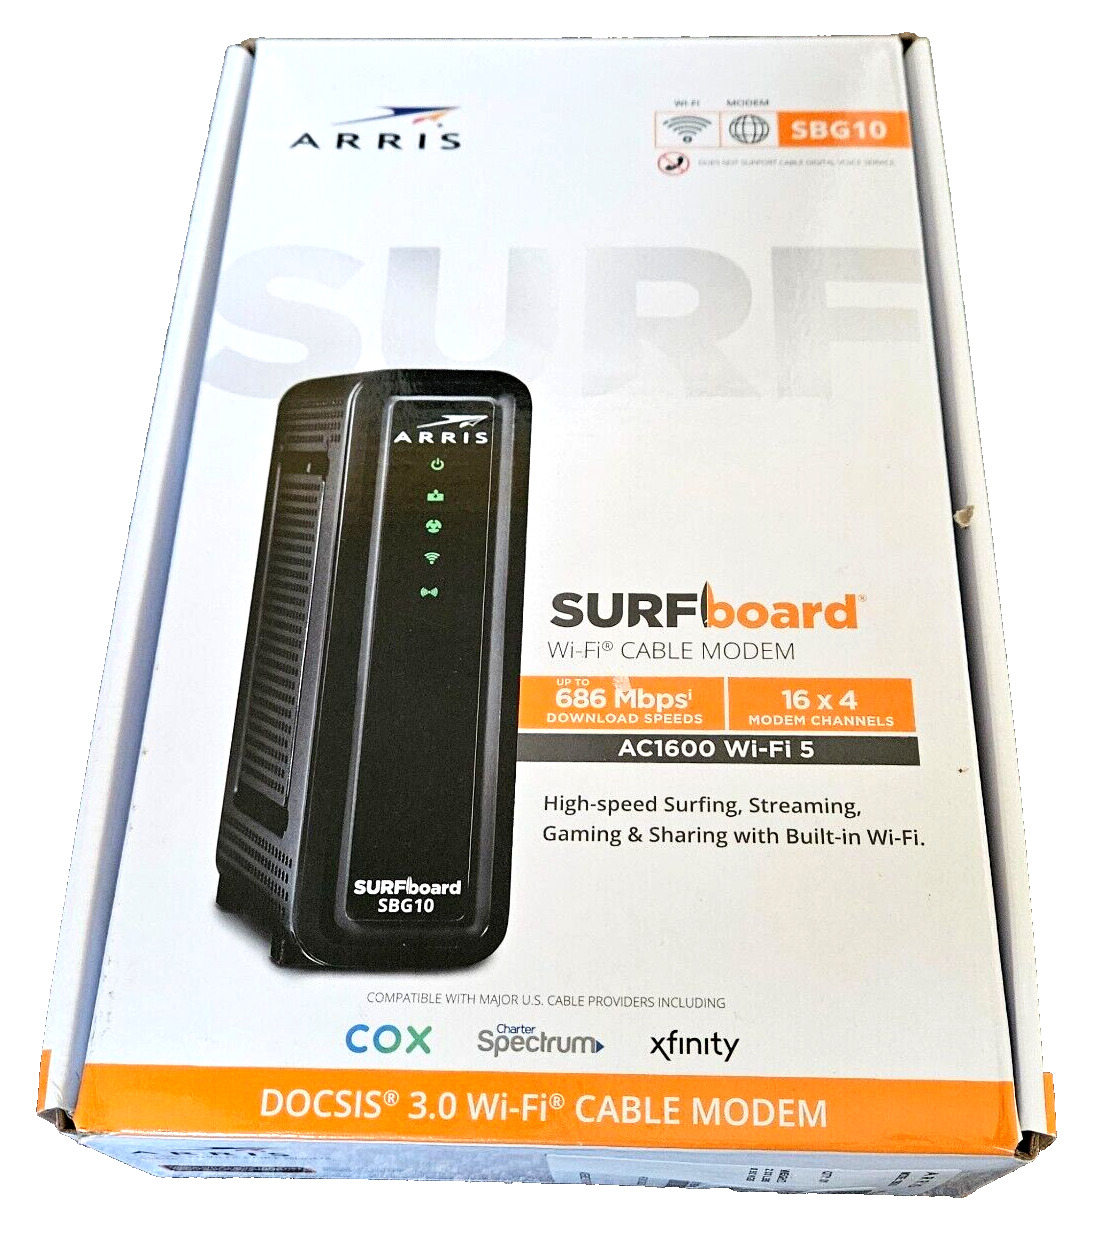 ARRIS SURFboard SBG10 DOCSIS 3.0 16x4 Gigabit Cable Modem & AC1600 Wi-Fi Router